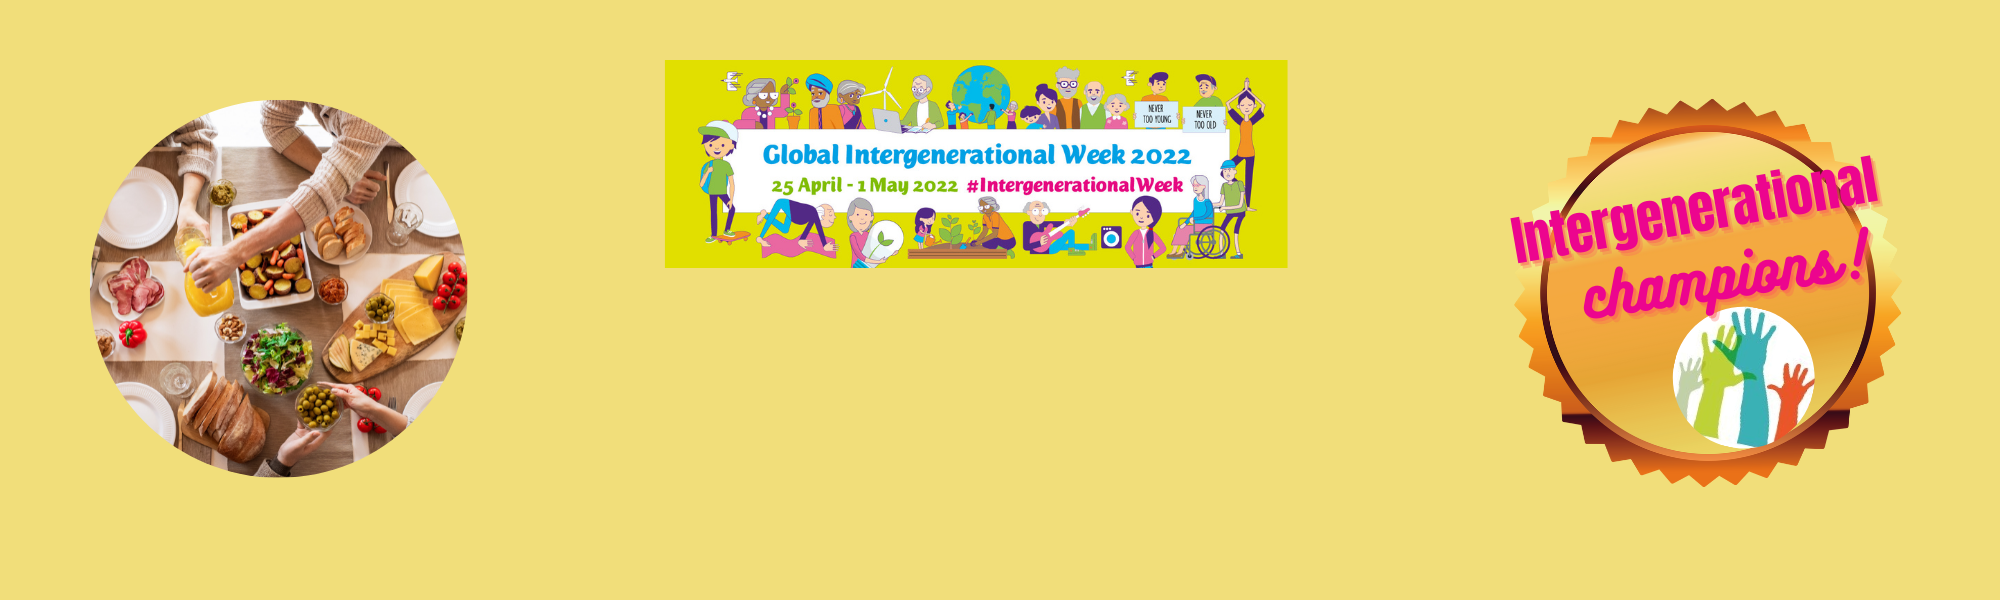 LGNI Global IG Week Events!